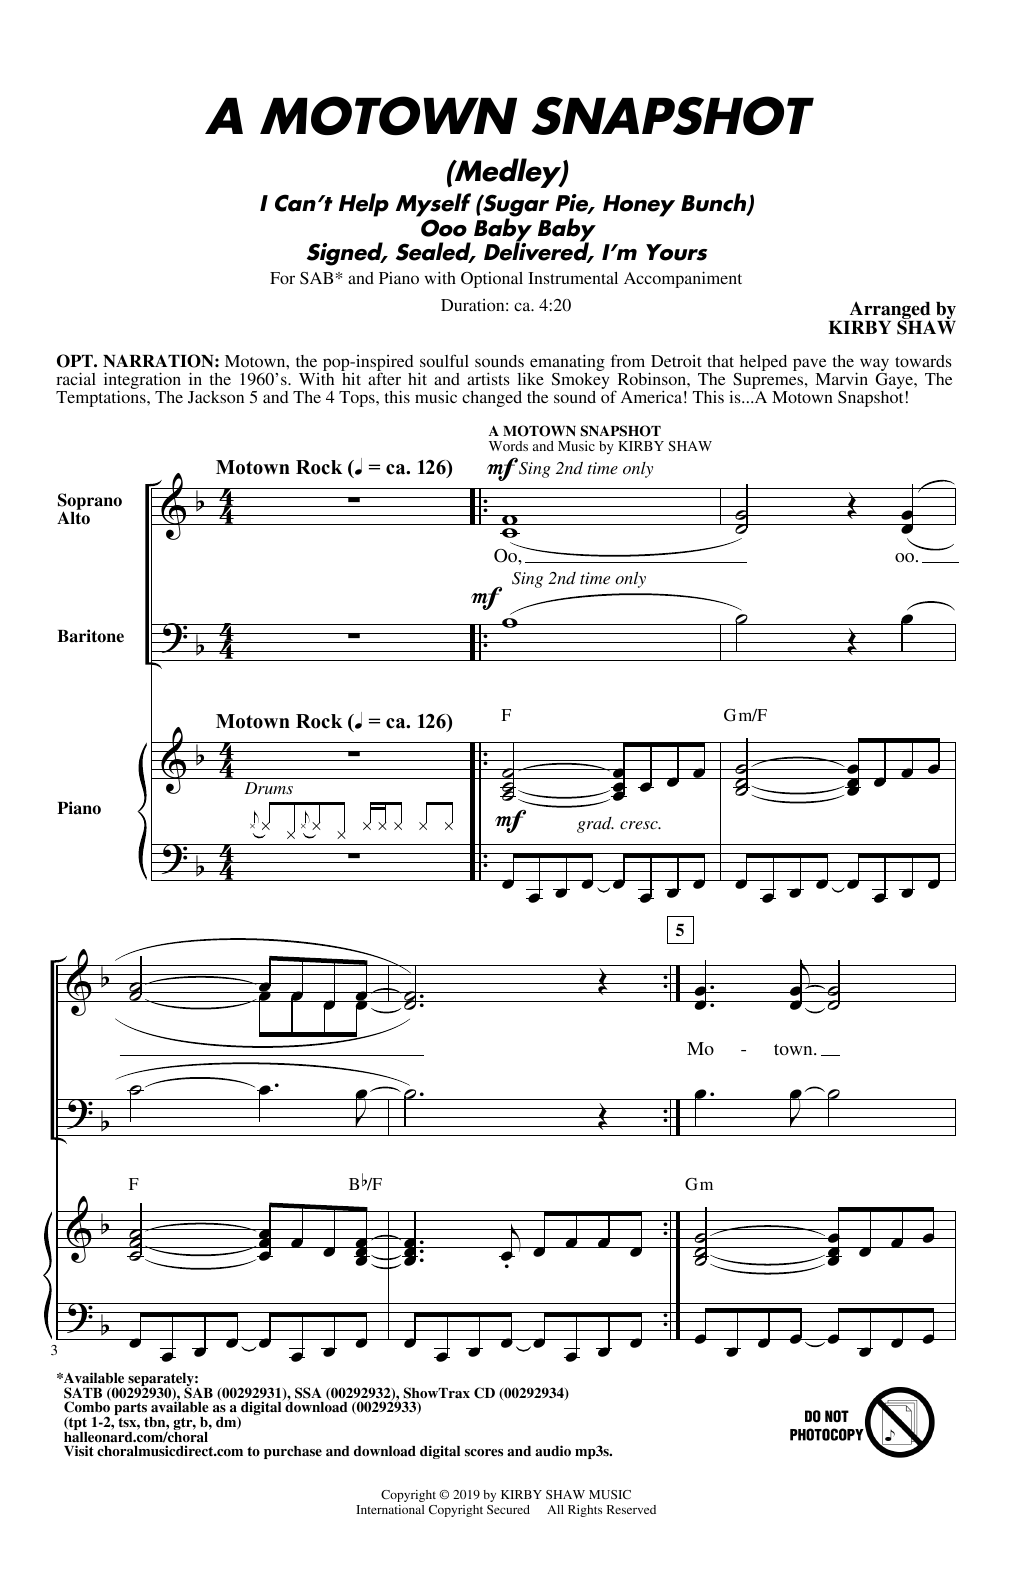 Kirby Shaw A Motown Snapshot (Medley) Sheet Music Notes & Chords for SATB Choir - Download or Print PDF